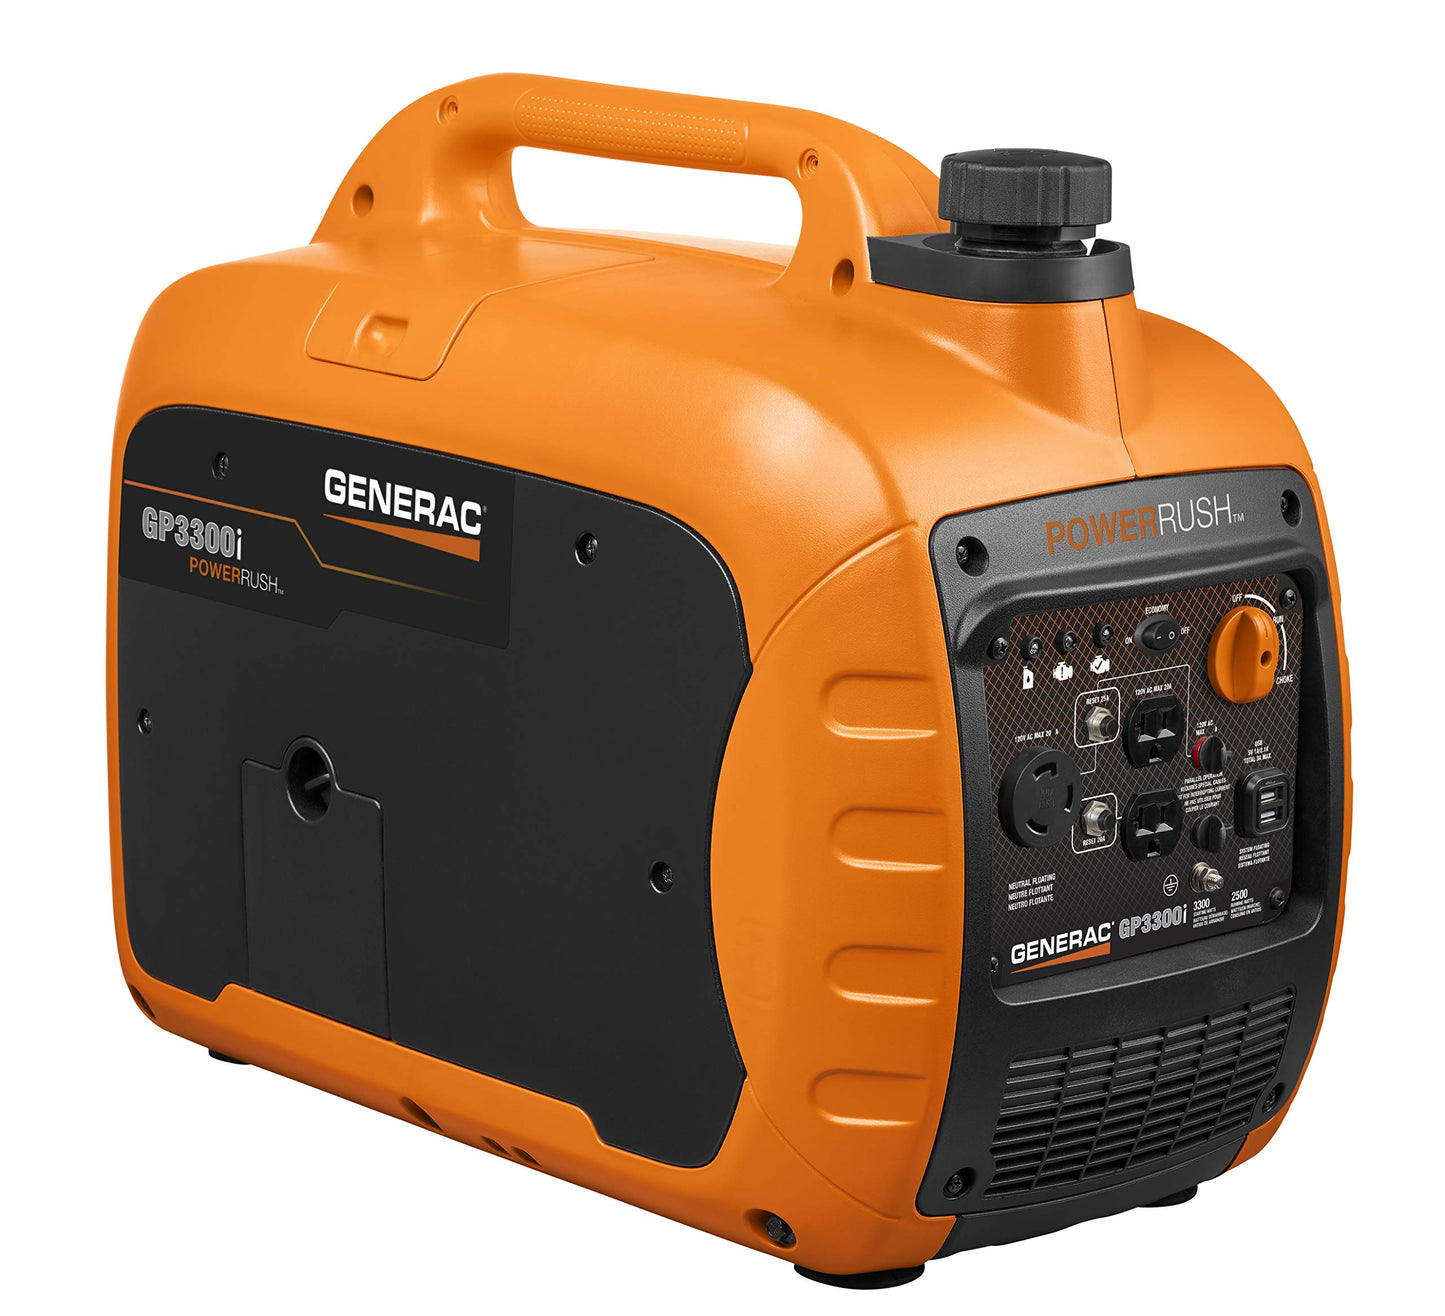 Generac GP3300i 7154 3,300-Watt Gas-Powered Portable Inverter Generator with CARB Compliant